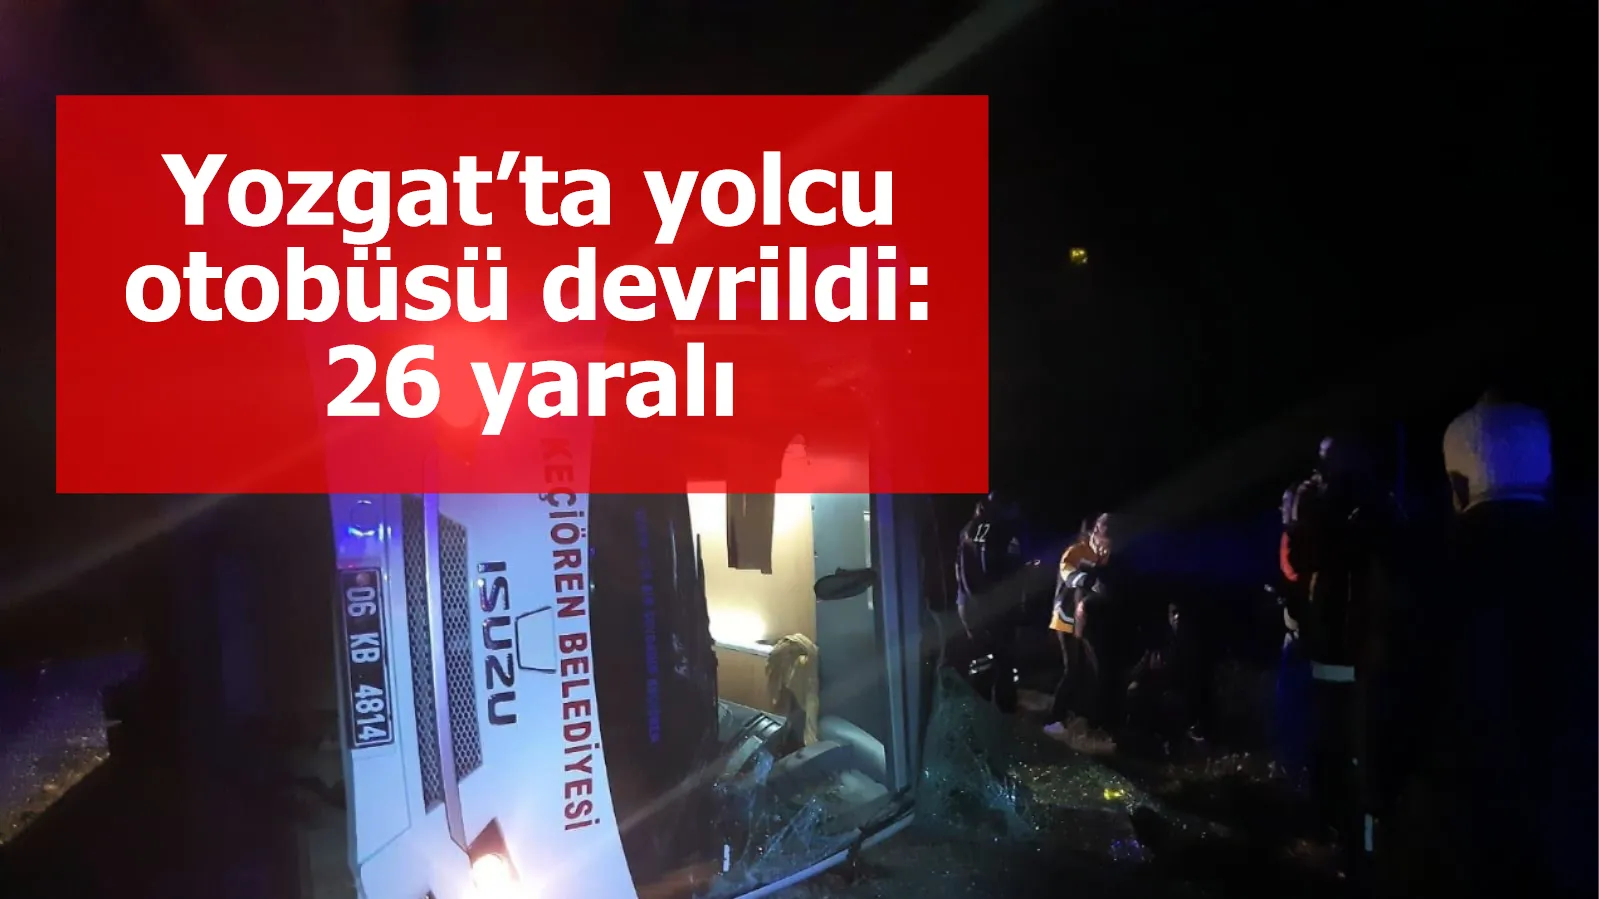 Yozgat’ta yolcu otobüsü devrildi: 26 yaralı